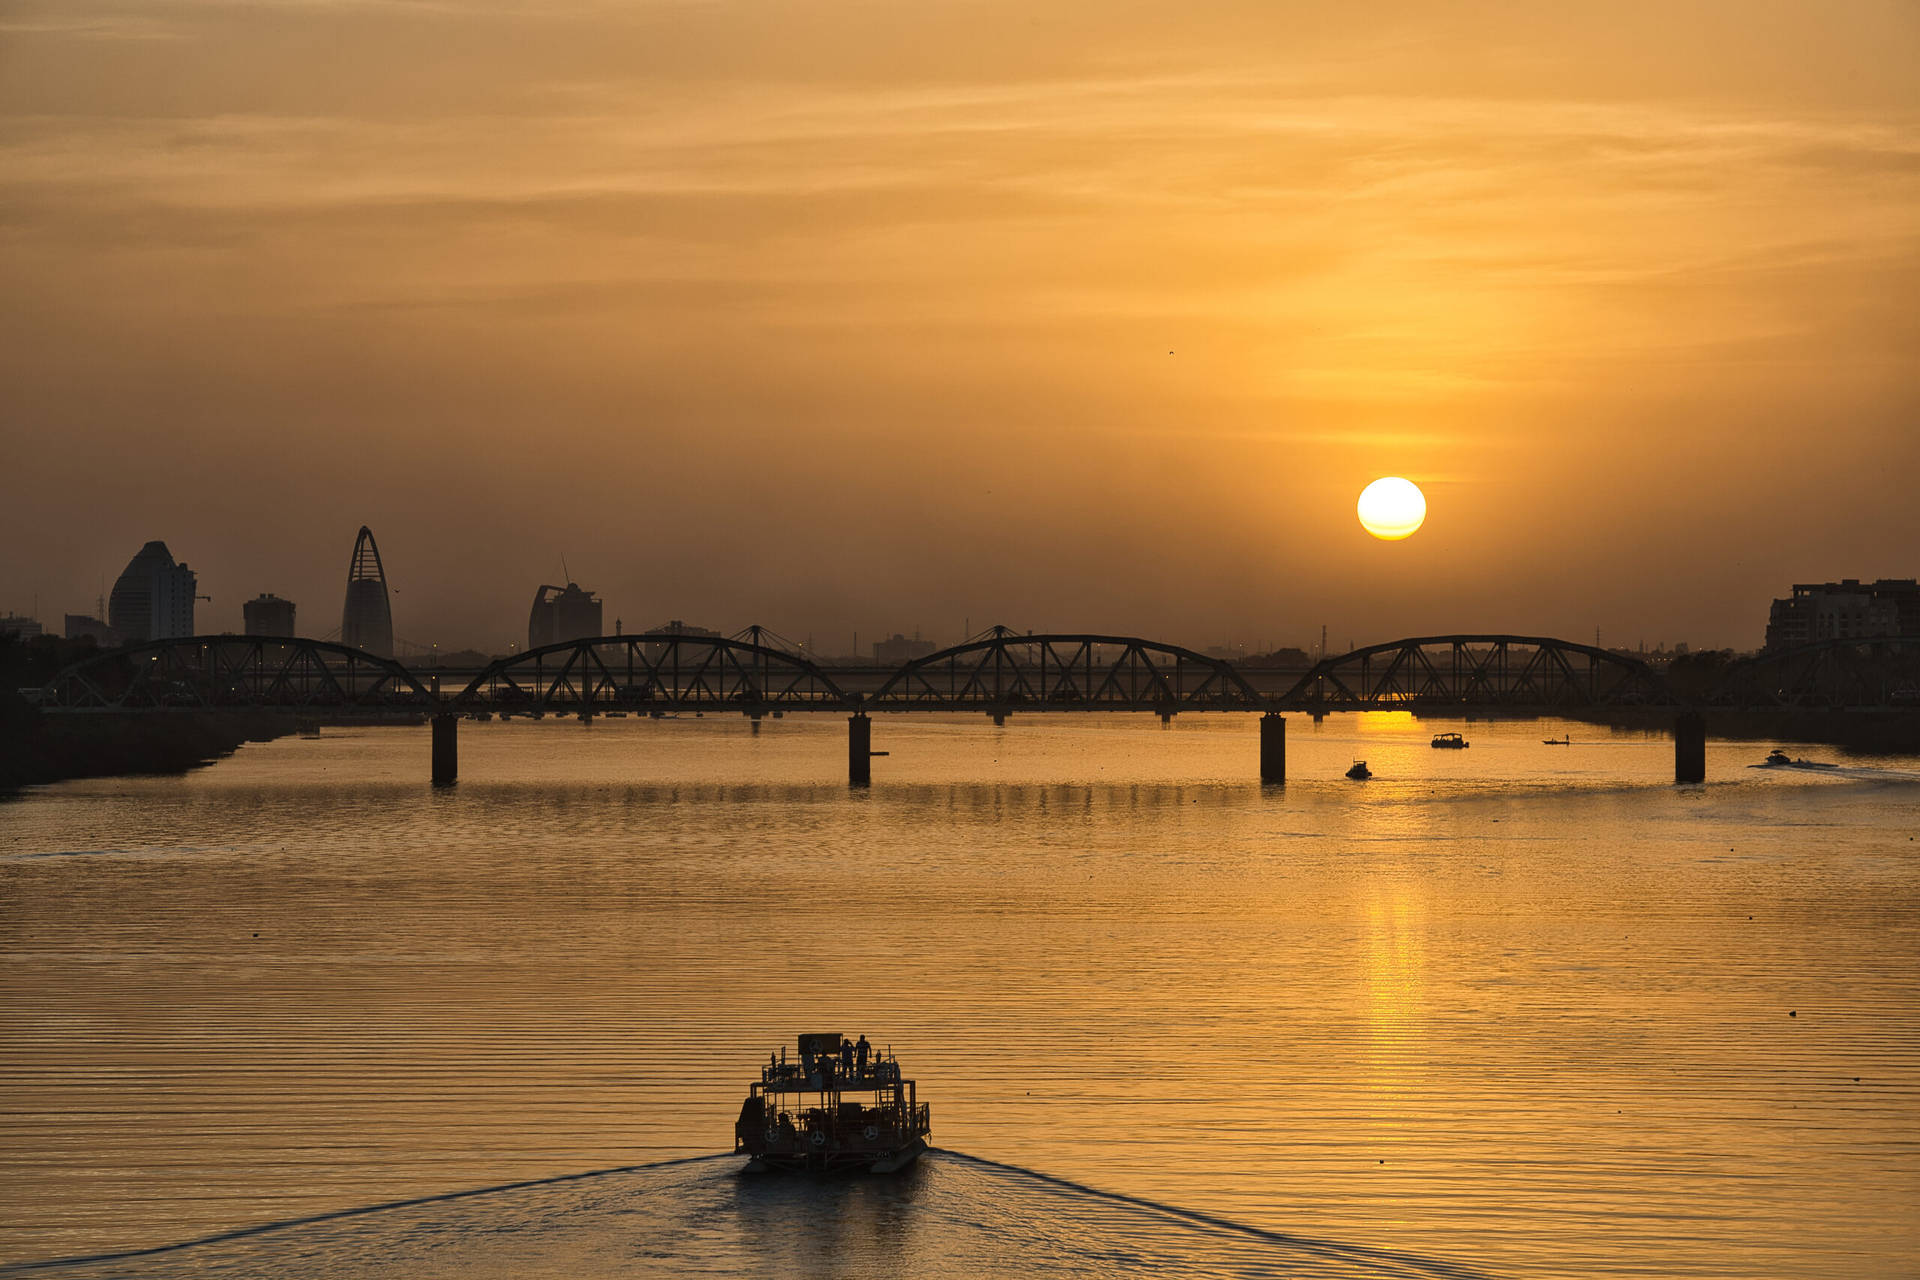 Sunset In Sudan Nile River